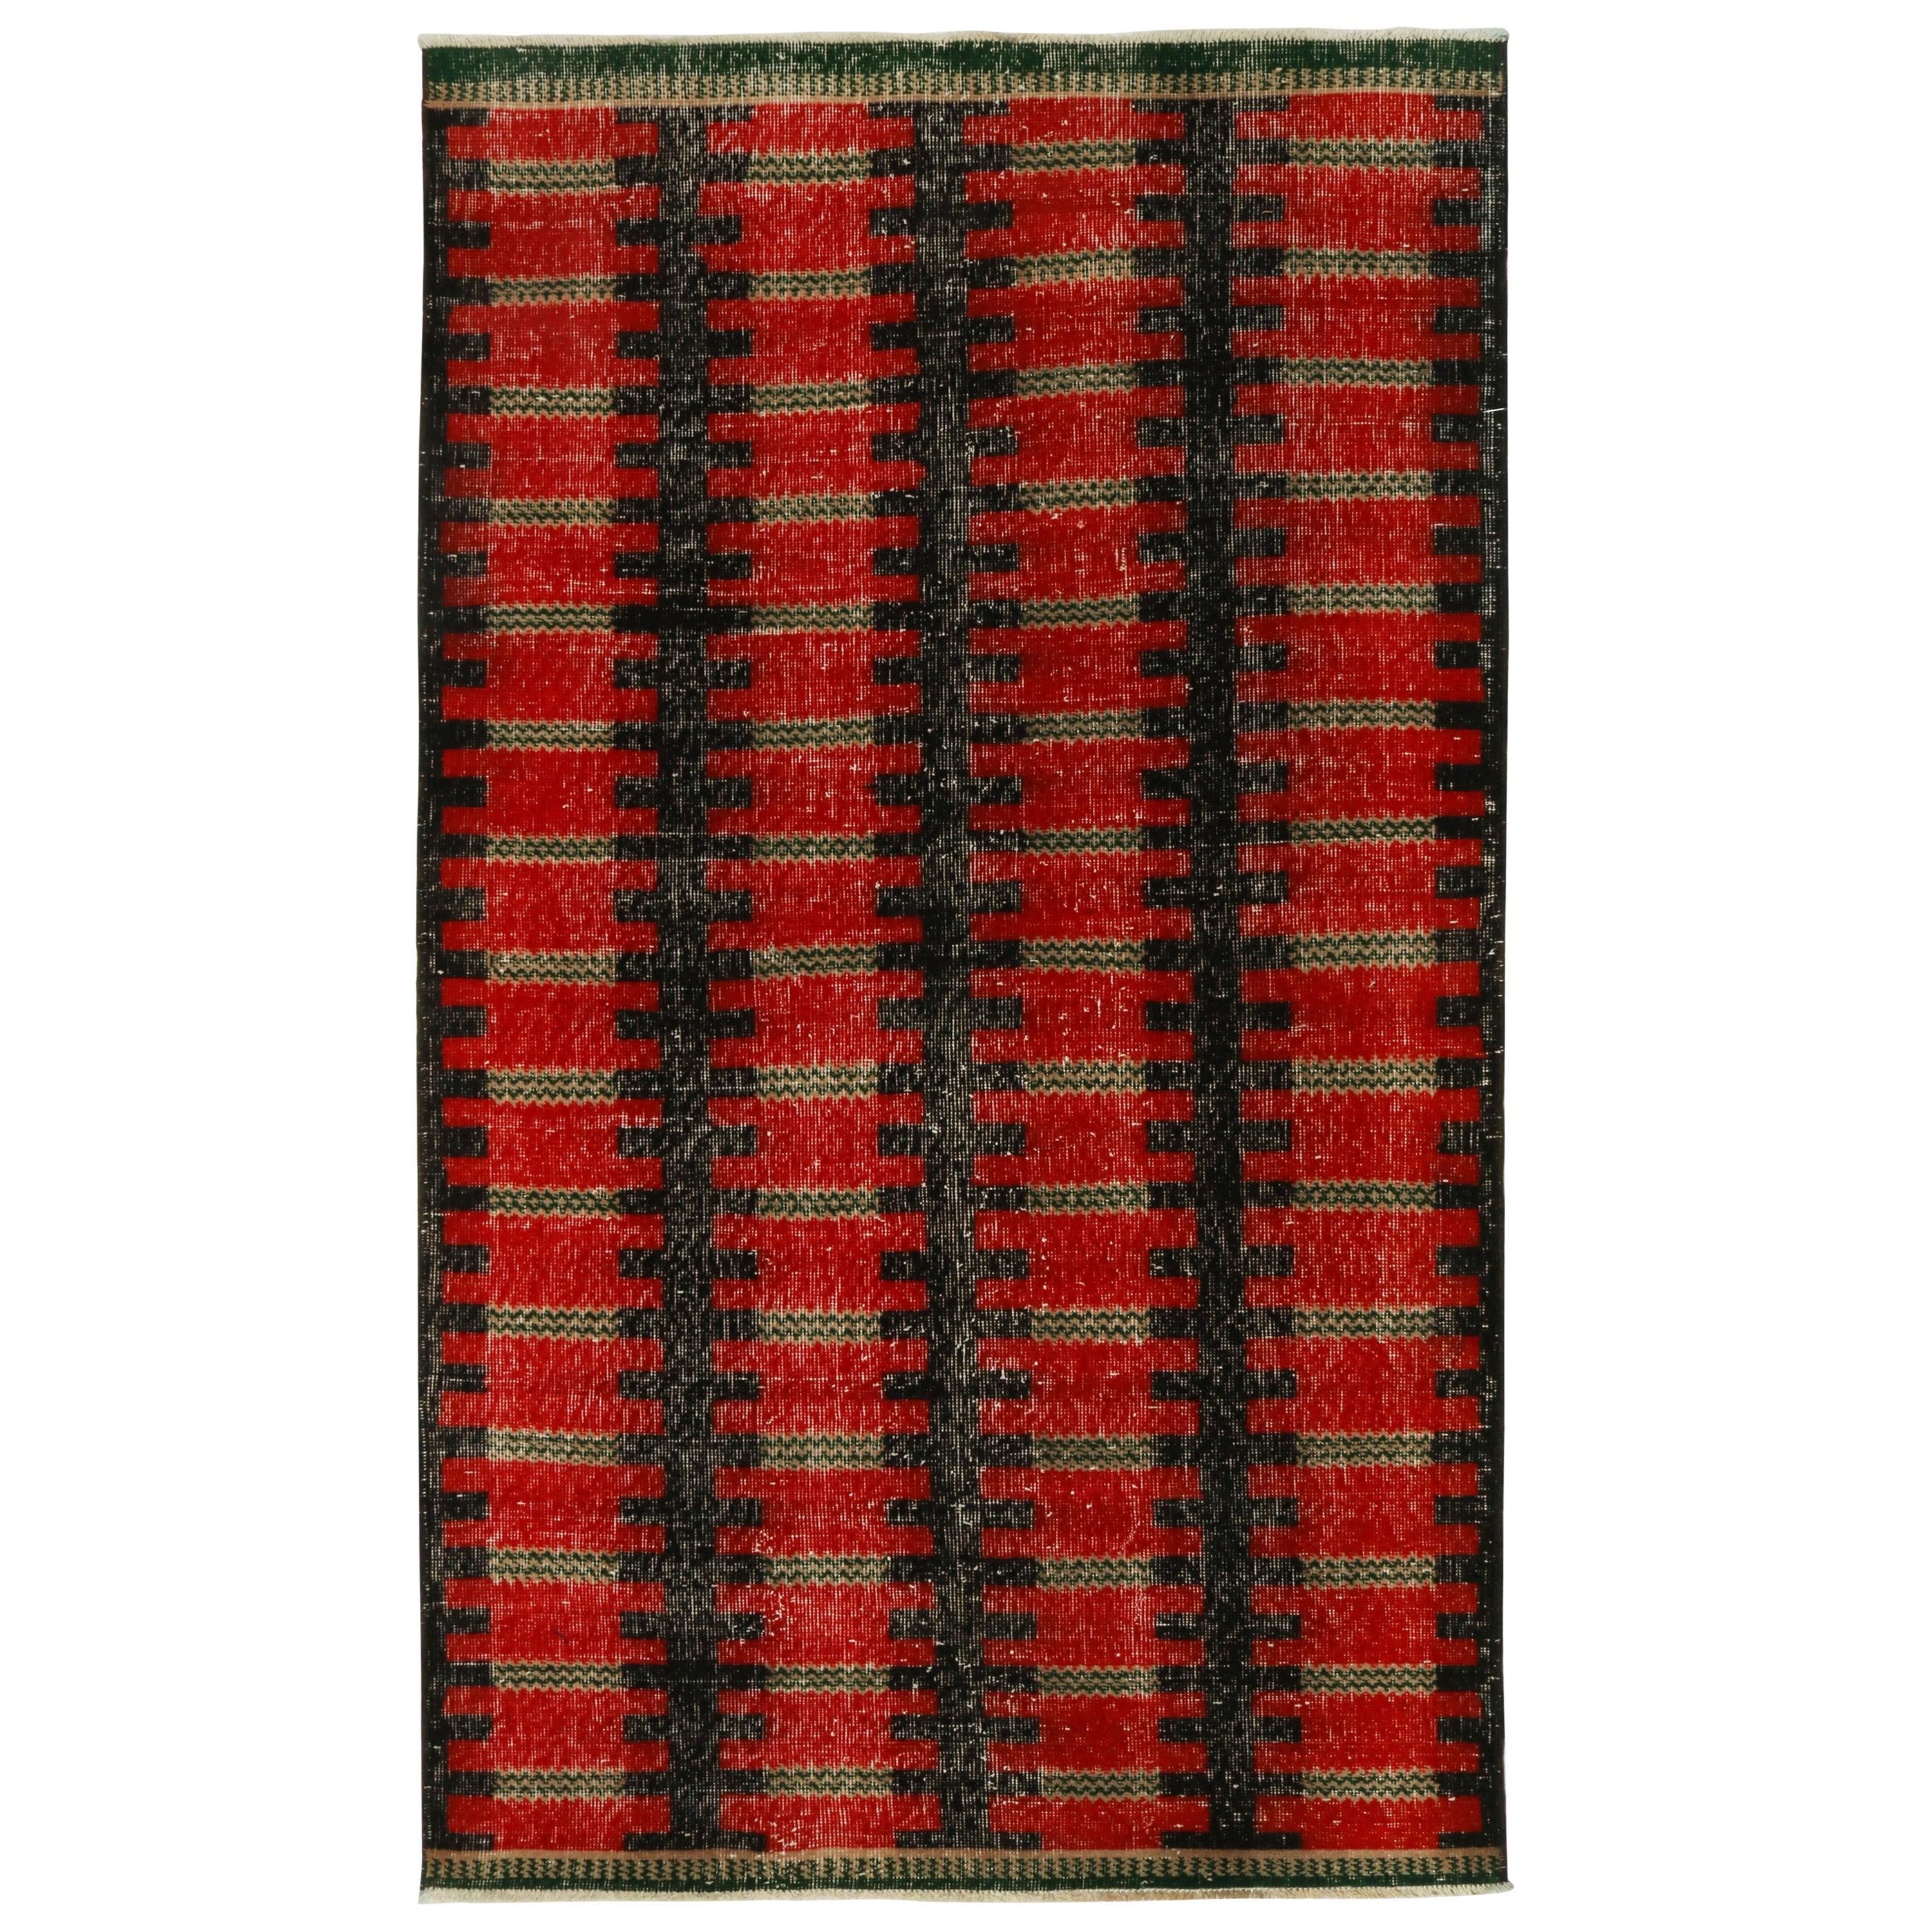 Vintage Zeki Müren Rugs with Red and Black Geometric Pattern, by Rug & Kilim